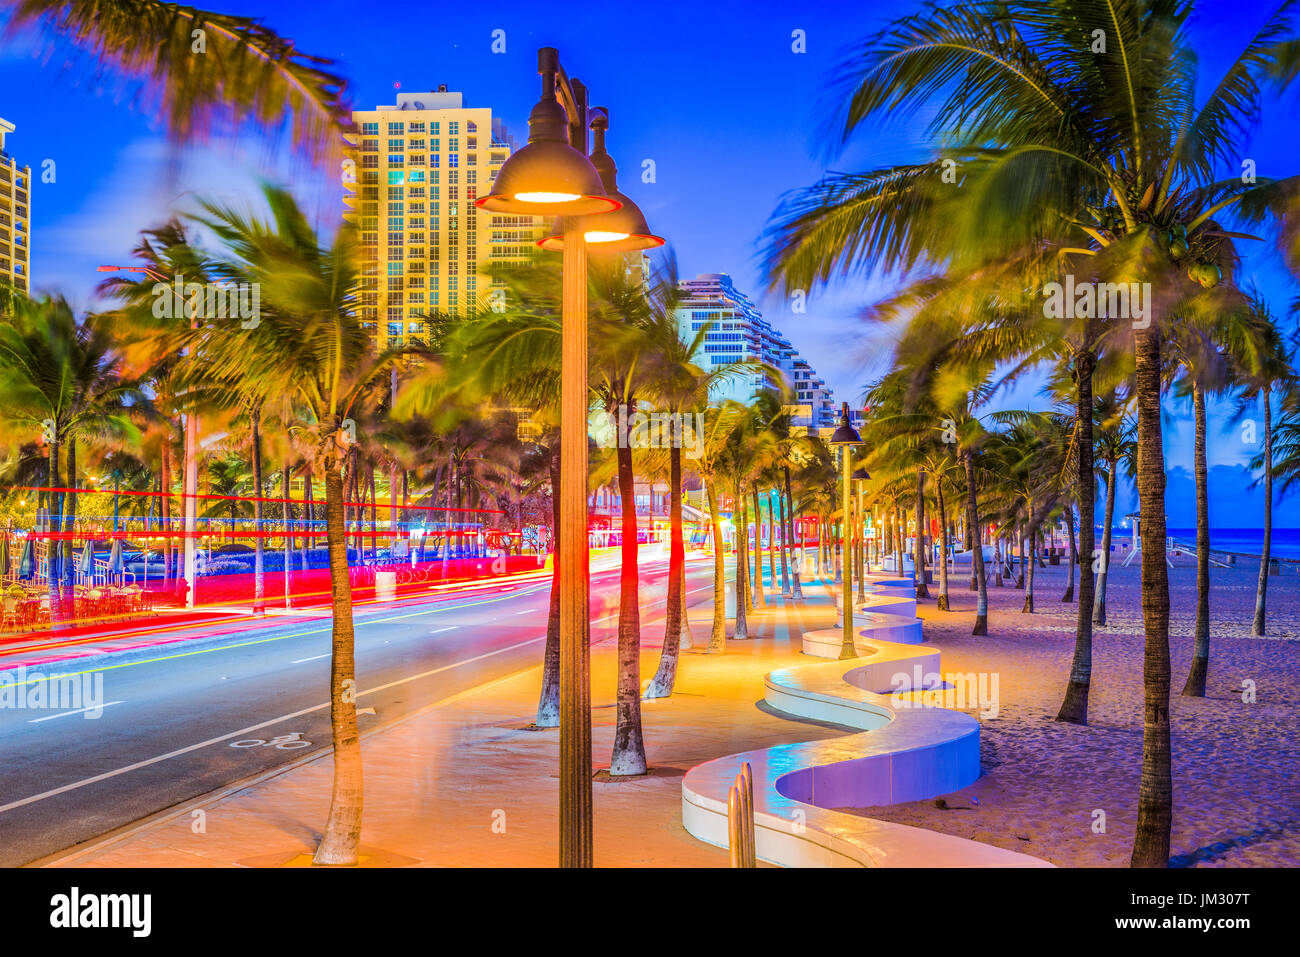 Ft. Lauderdale, Florida, USA on the beach strip. Stock Photo